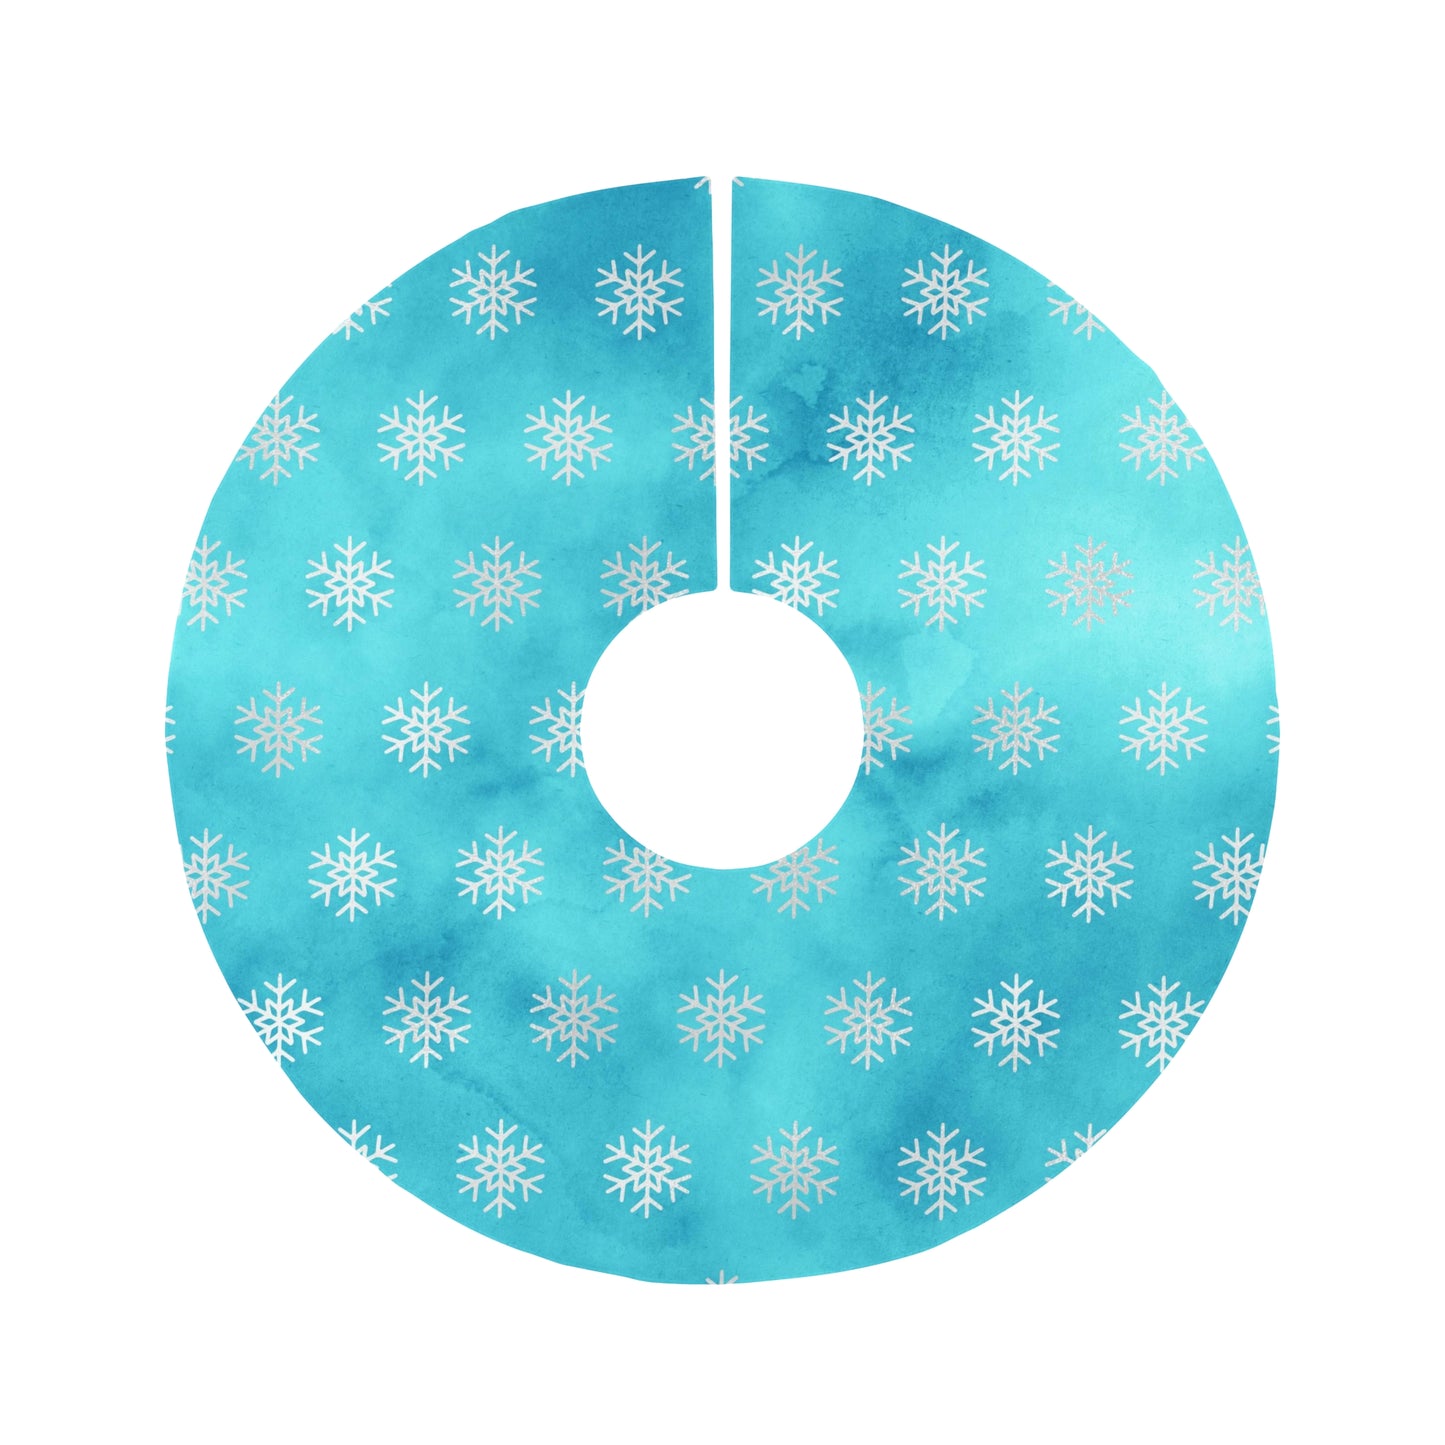 Blue Snowflake Christmas Tree Skirt, Snowflake Seasonal Decor Christmas,